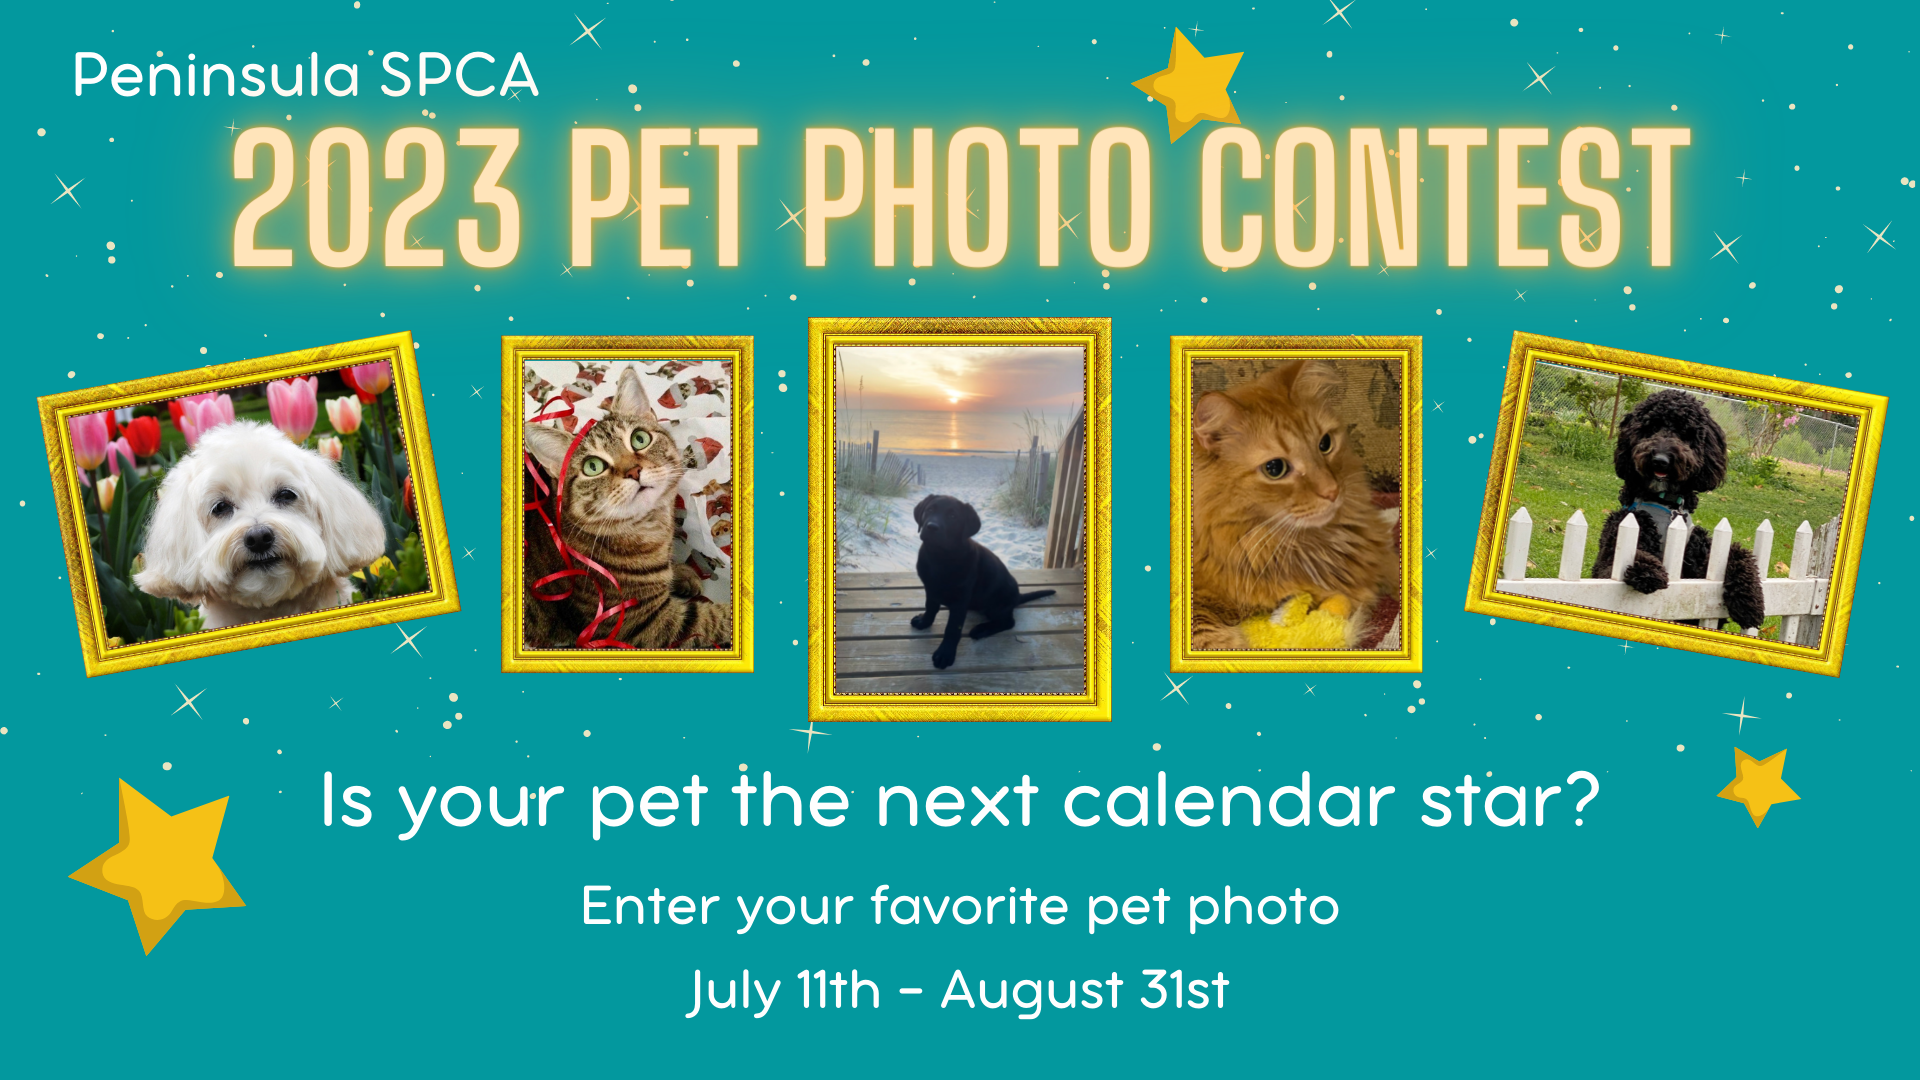 peninsula-spca-2023-peninsula-spca-calendar-photo-contest